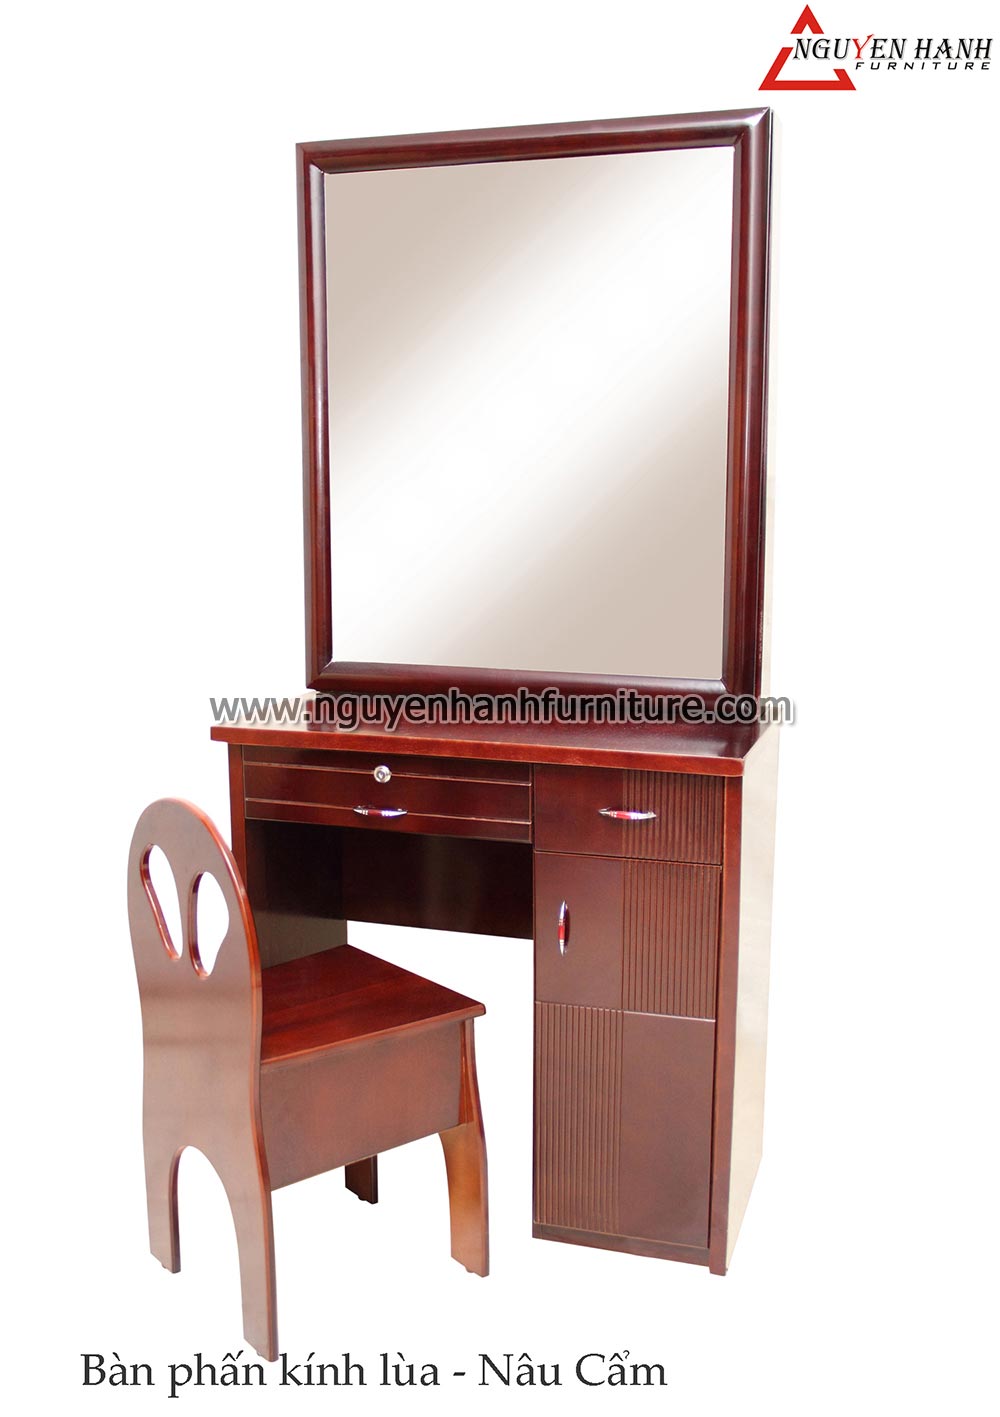 Name product: Brown Makeup Desk of Rosewood with closet mirror - Dimensions: 80 x 42cm - Description: Veneer bead tree wood